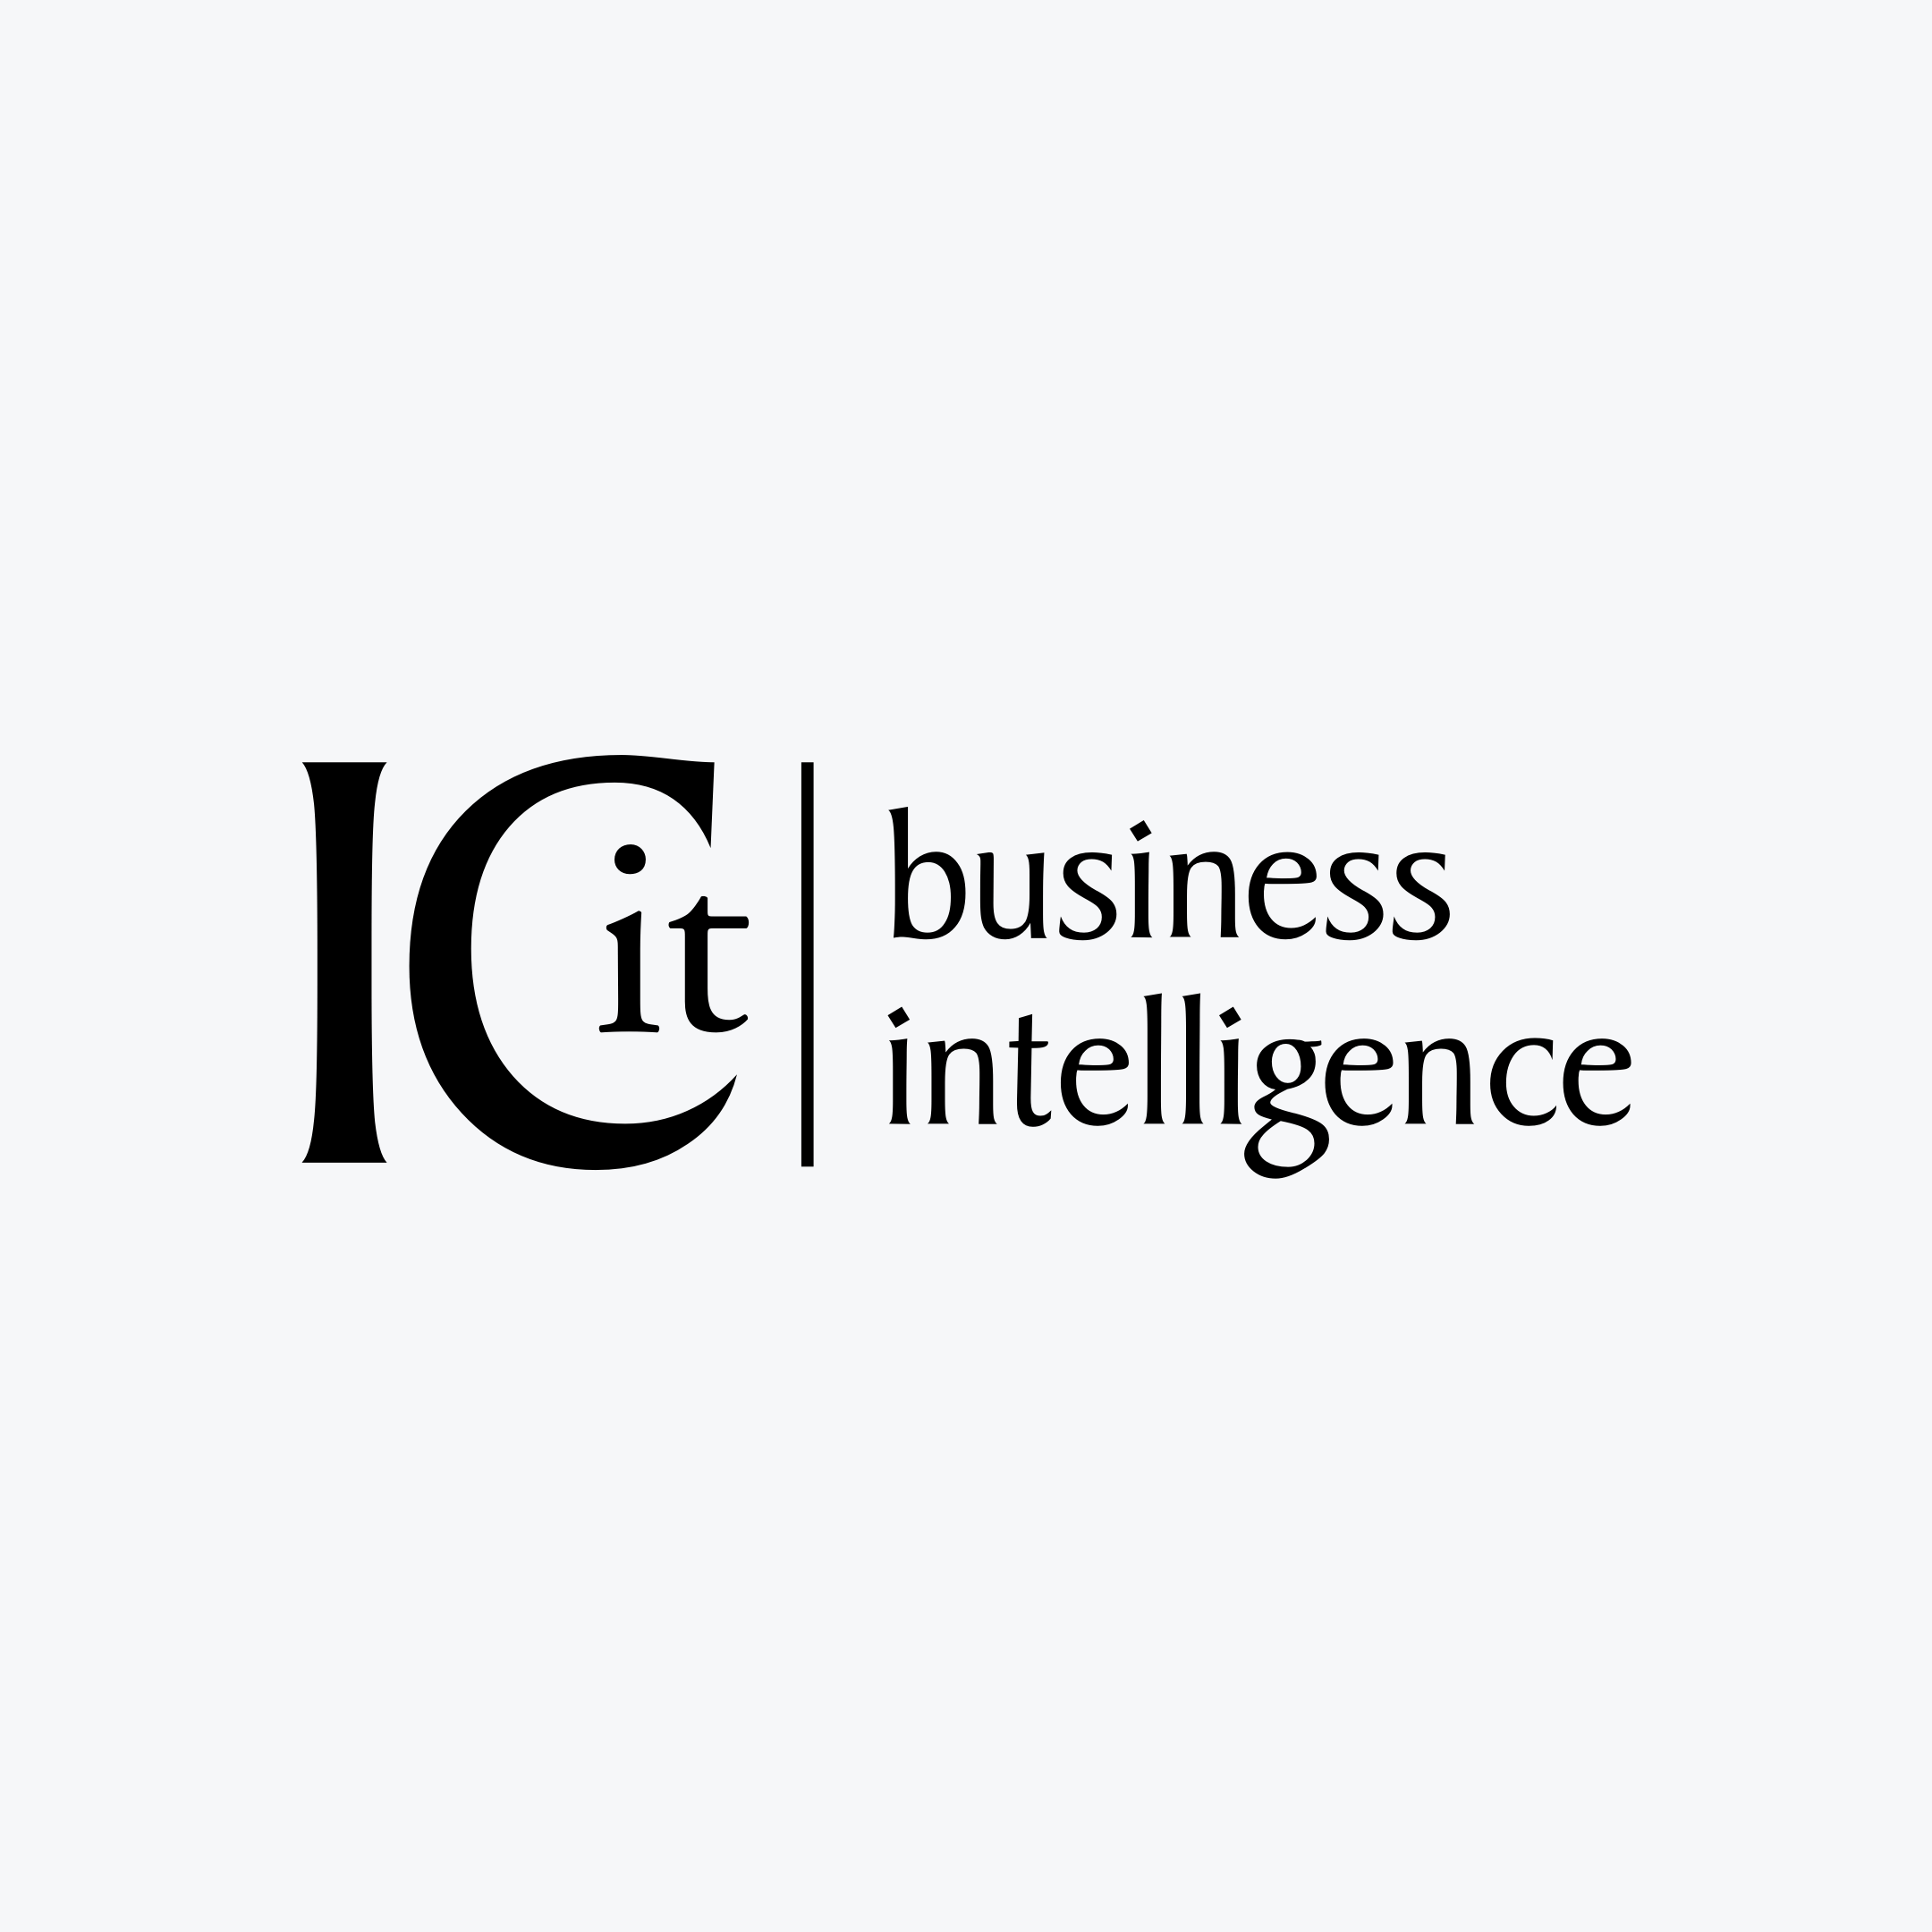 ICit logo canvass